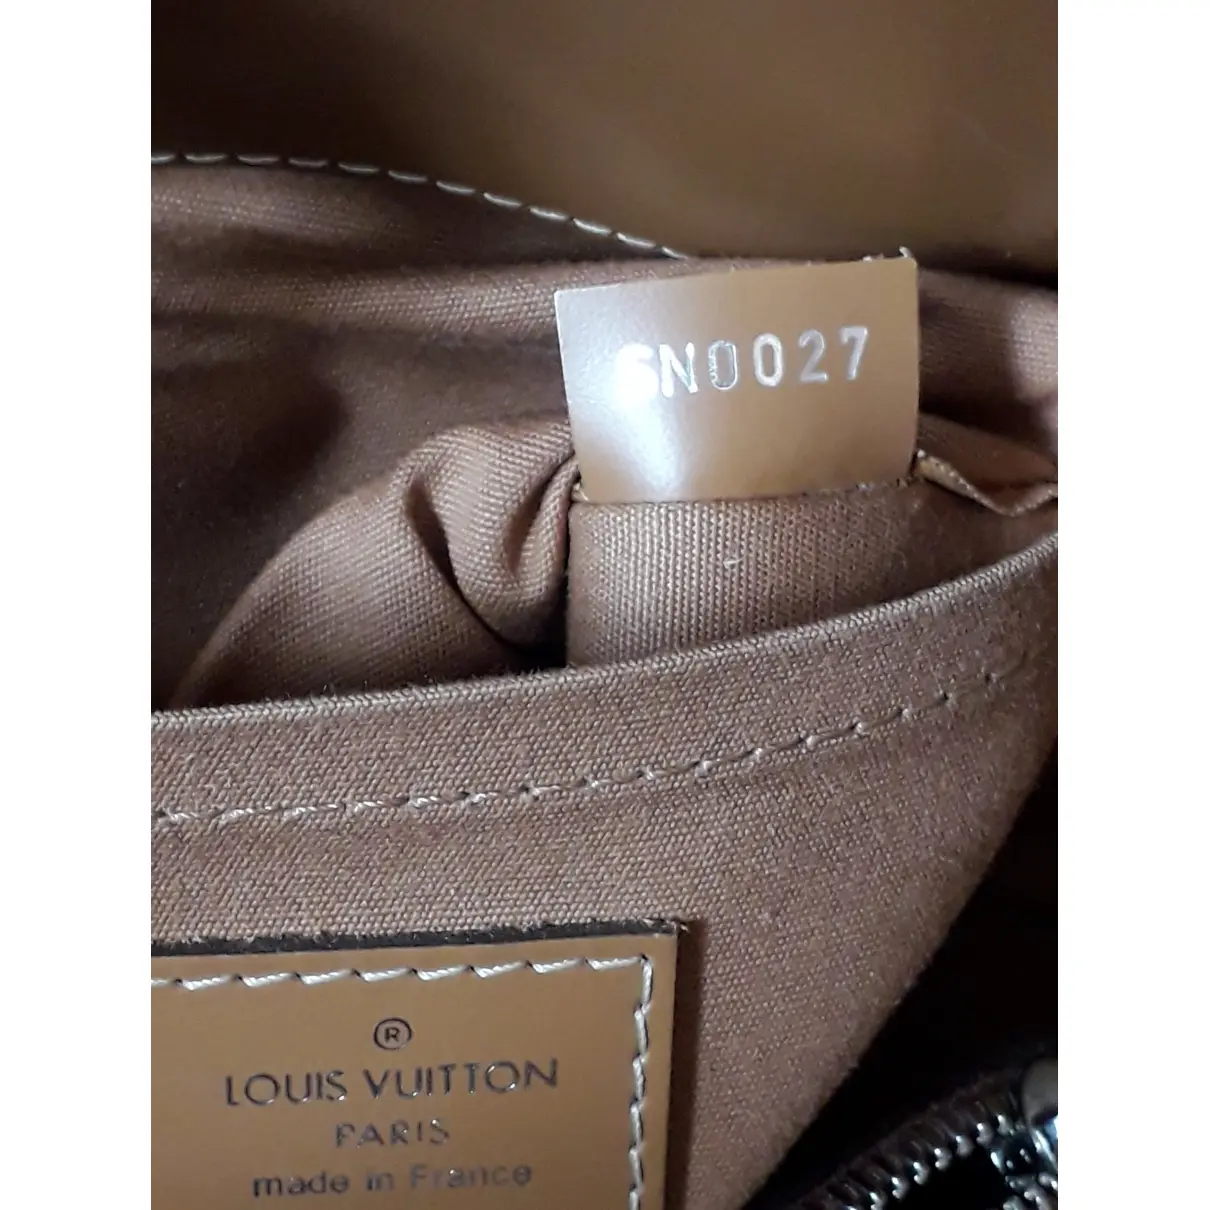 Passy leather handbag Louis Vuitton